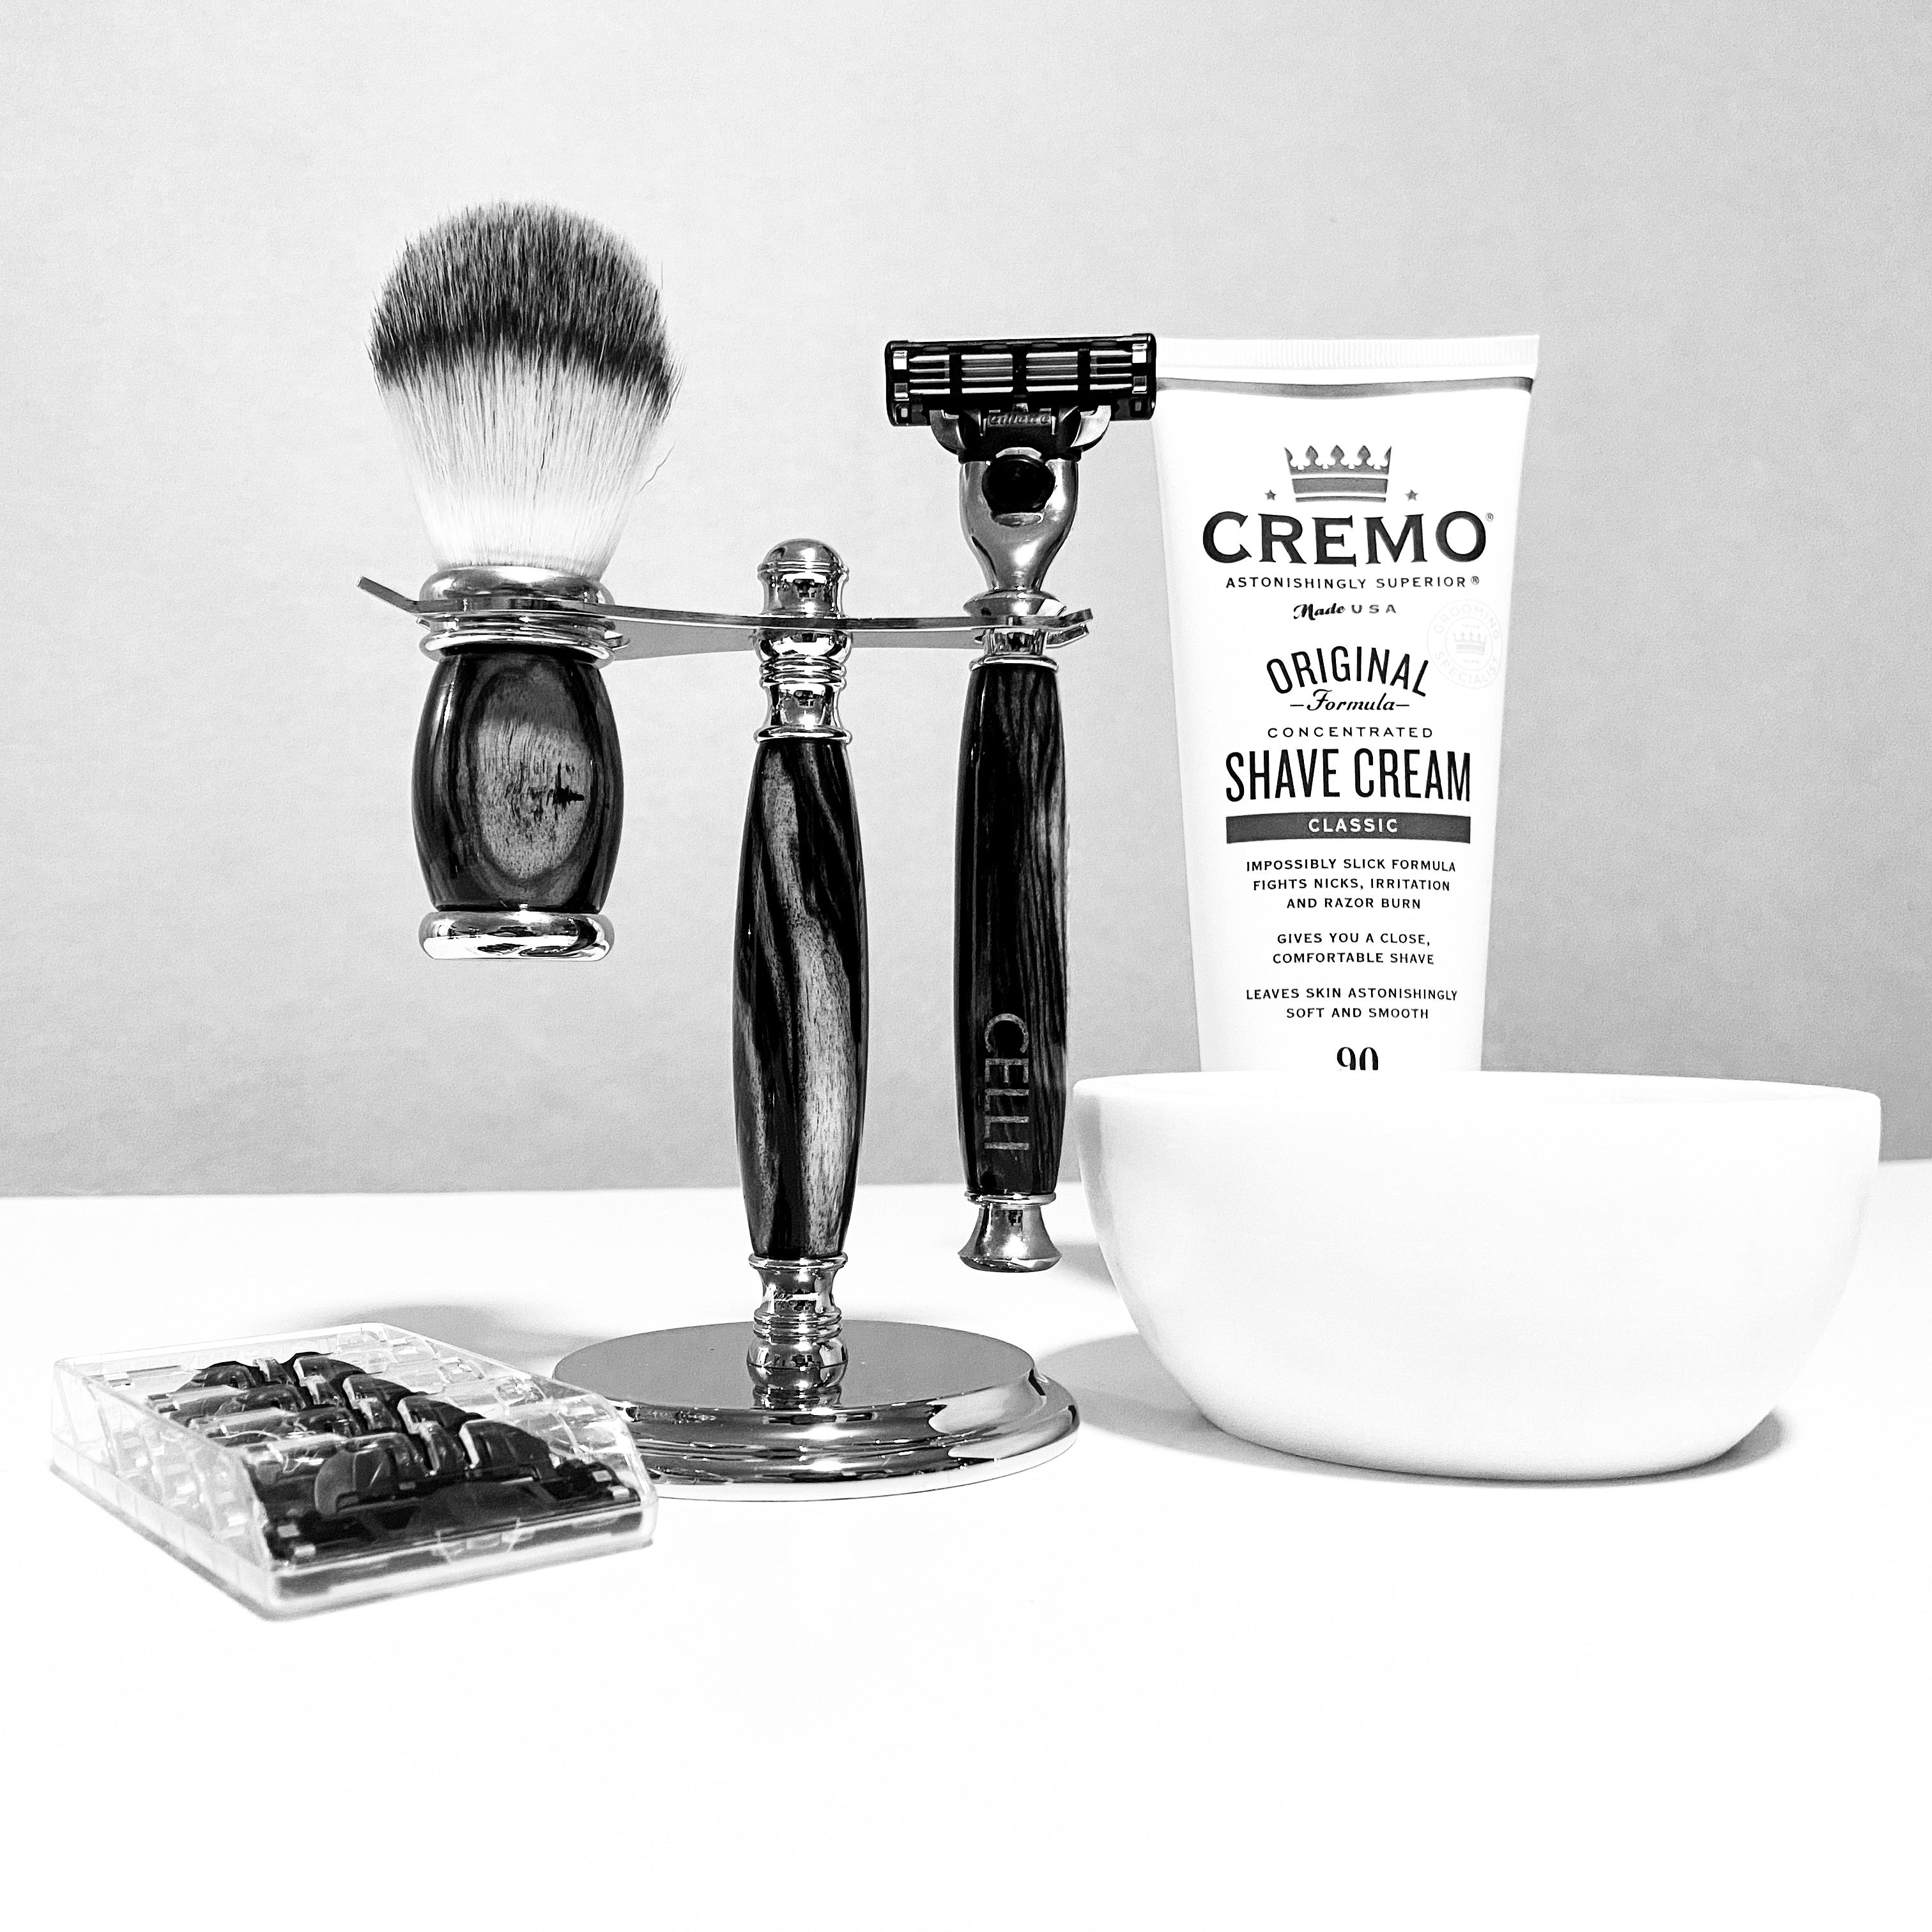 Celli Shave Luxury Shaving Gift Set